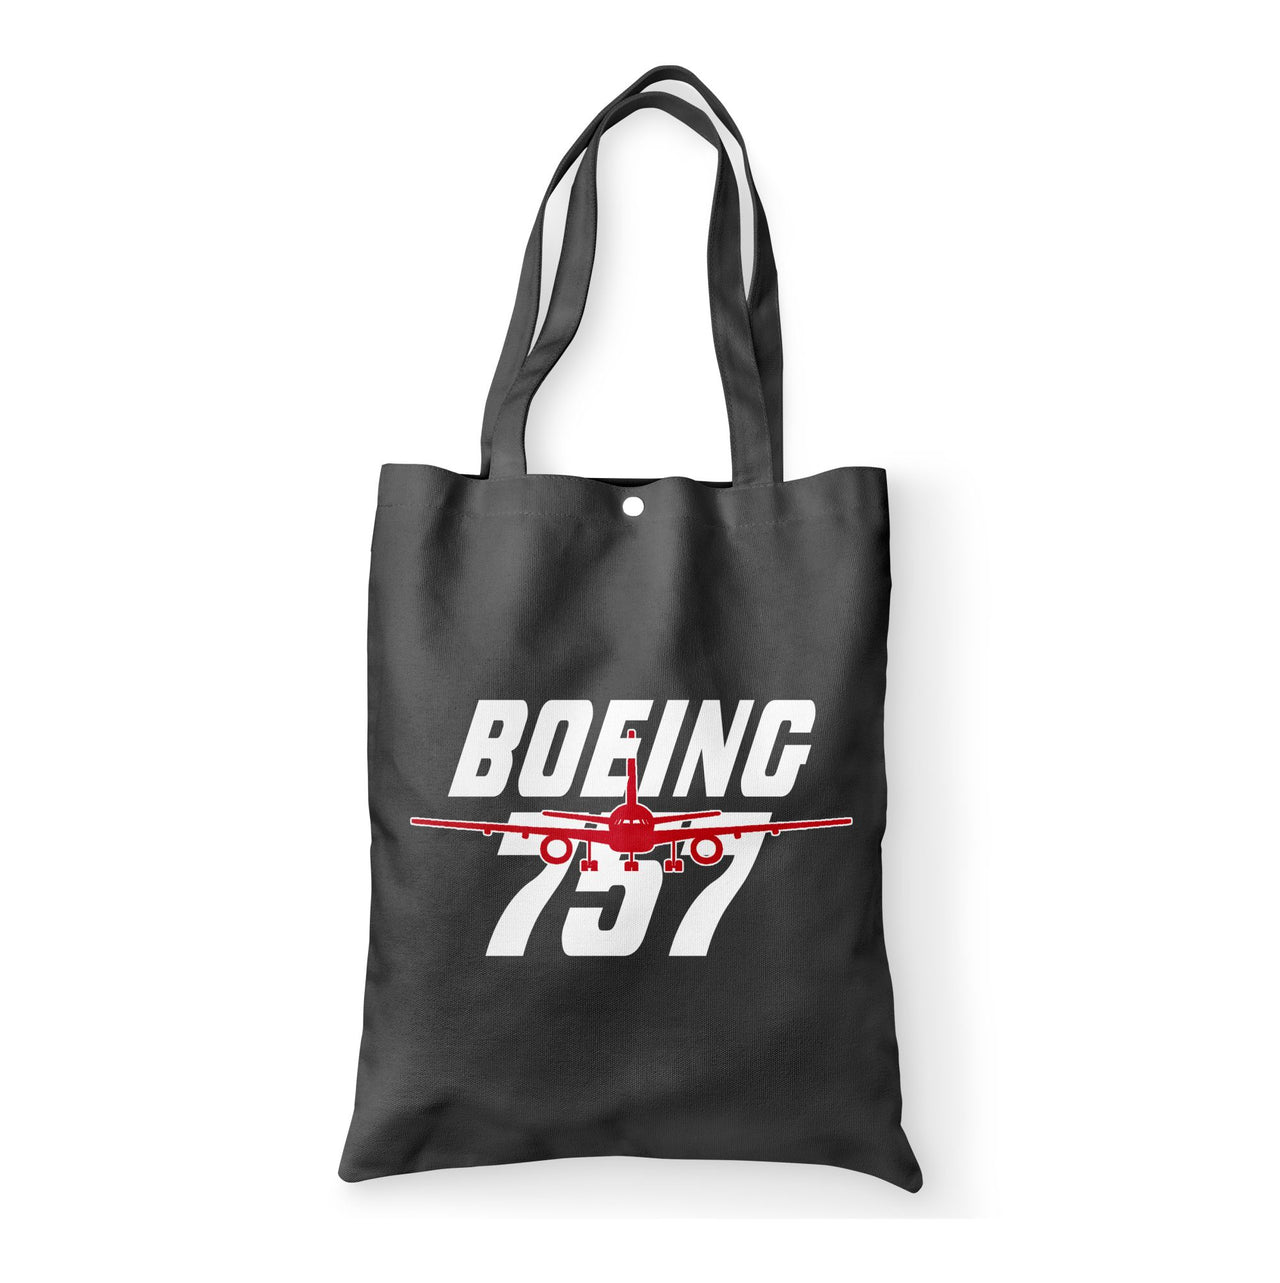 Amazing Boeing 757 Designed Tote Bags